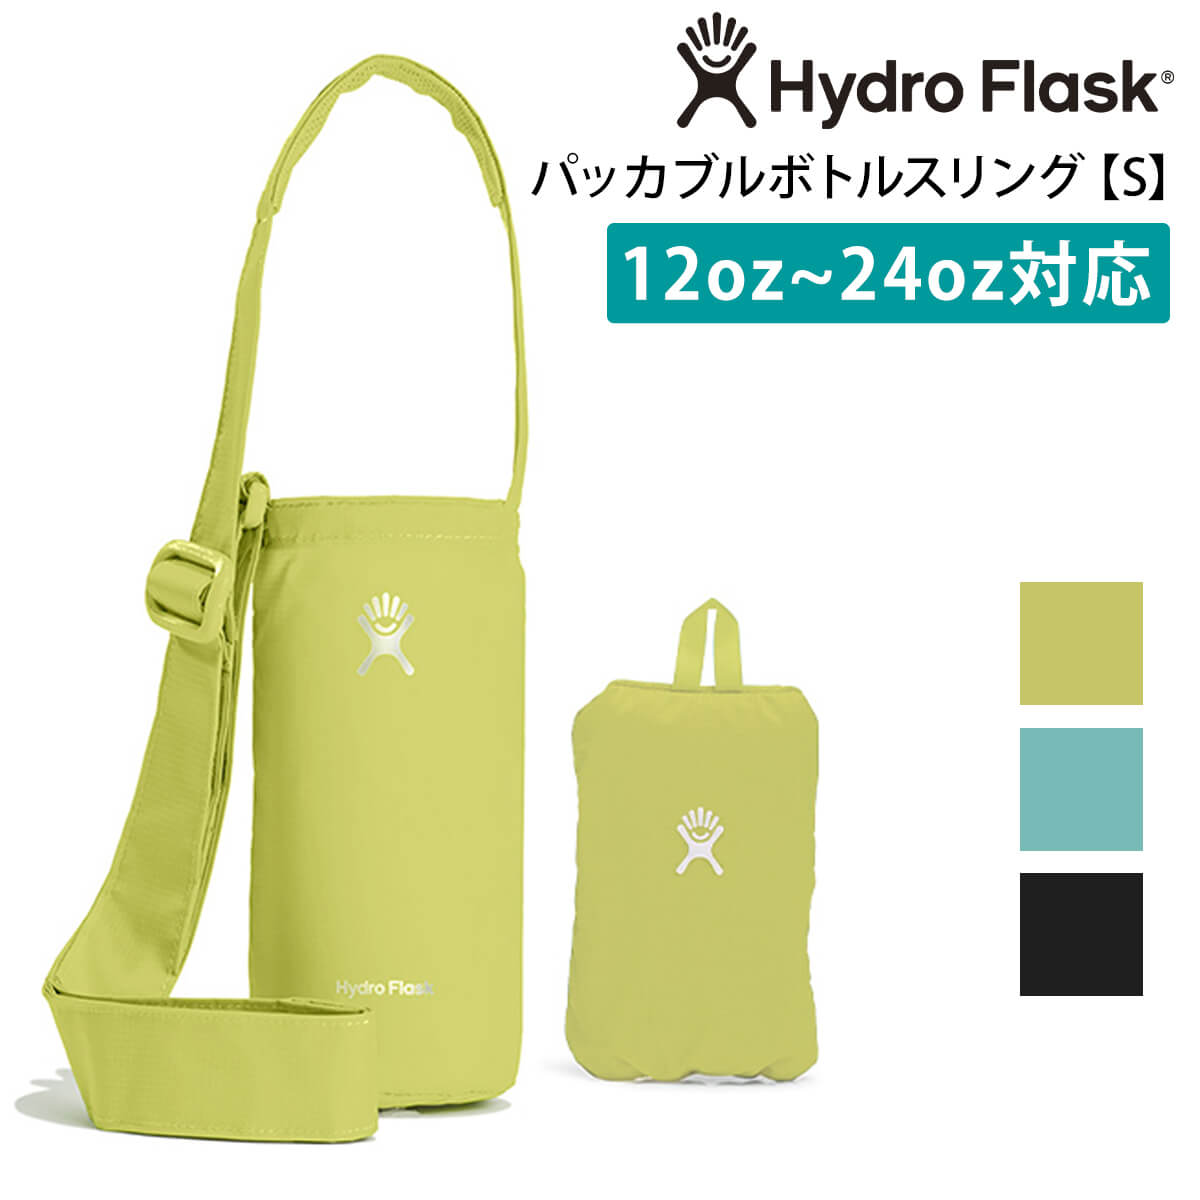 5 OFF ハイドロフラスク アウトドア Hydro Flask パッカブル ボトルスリング S 日本正規品 Packable Bottle Sling S 23SS ボトルカバー ホルダー ケース 収納 斜め掛け 保温 保冷「KH」